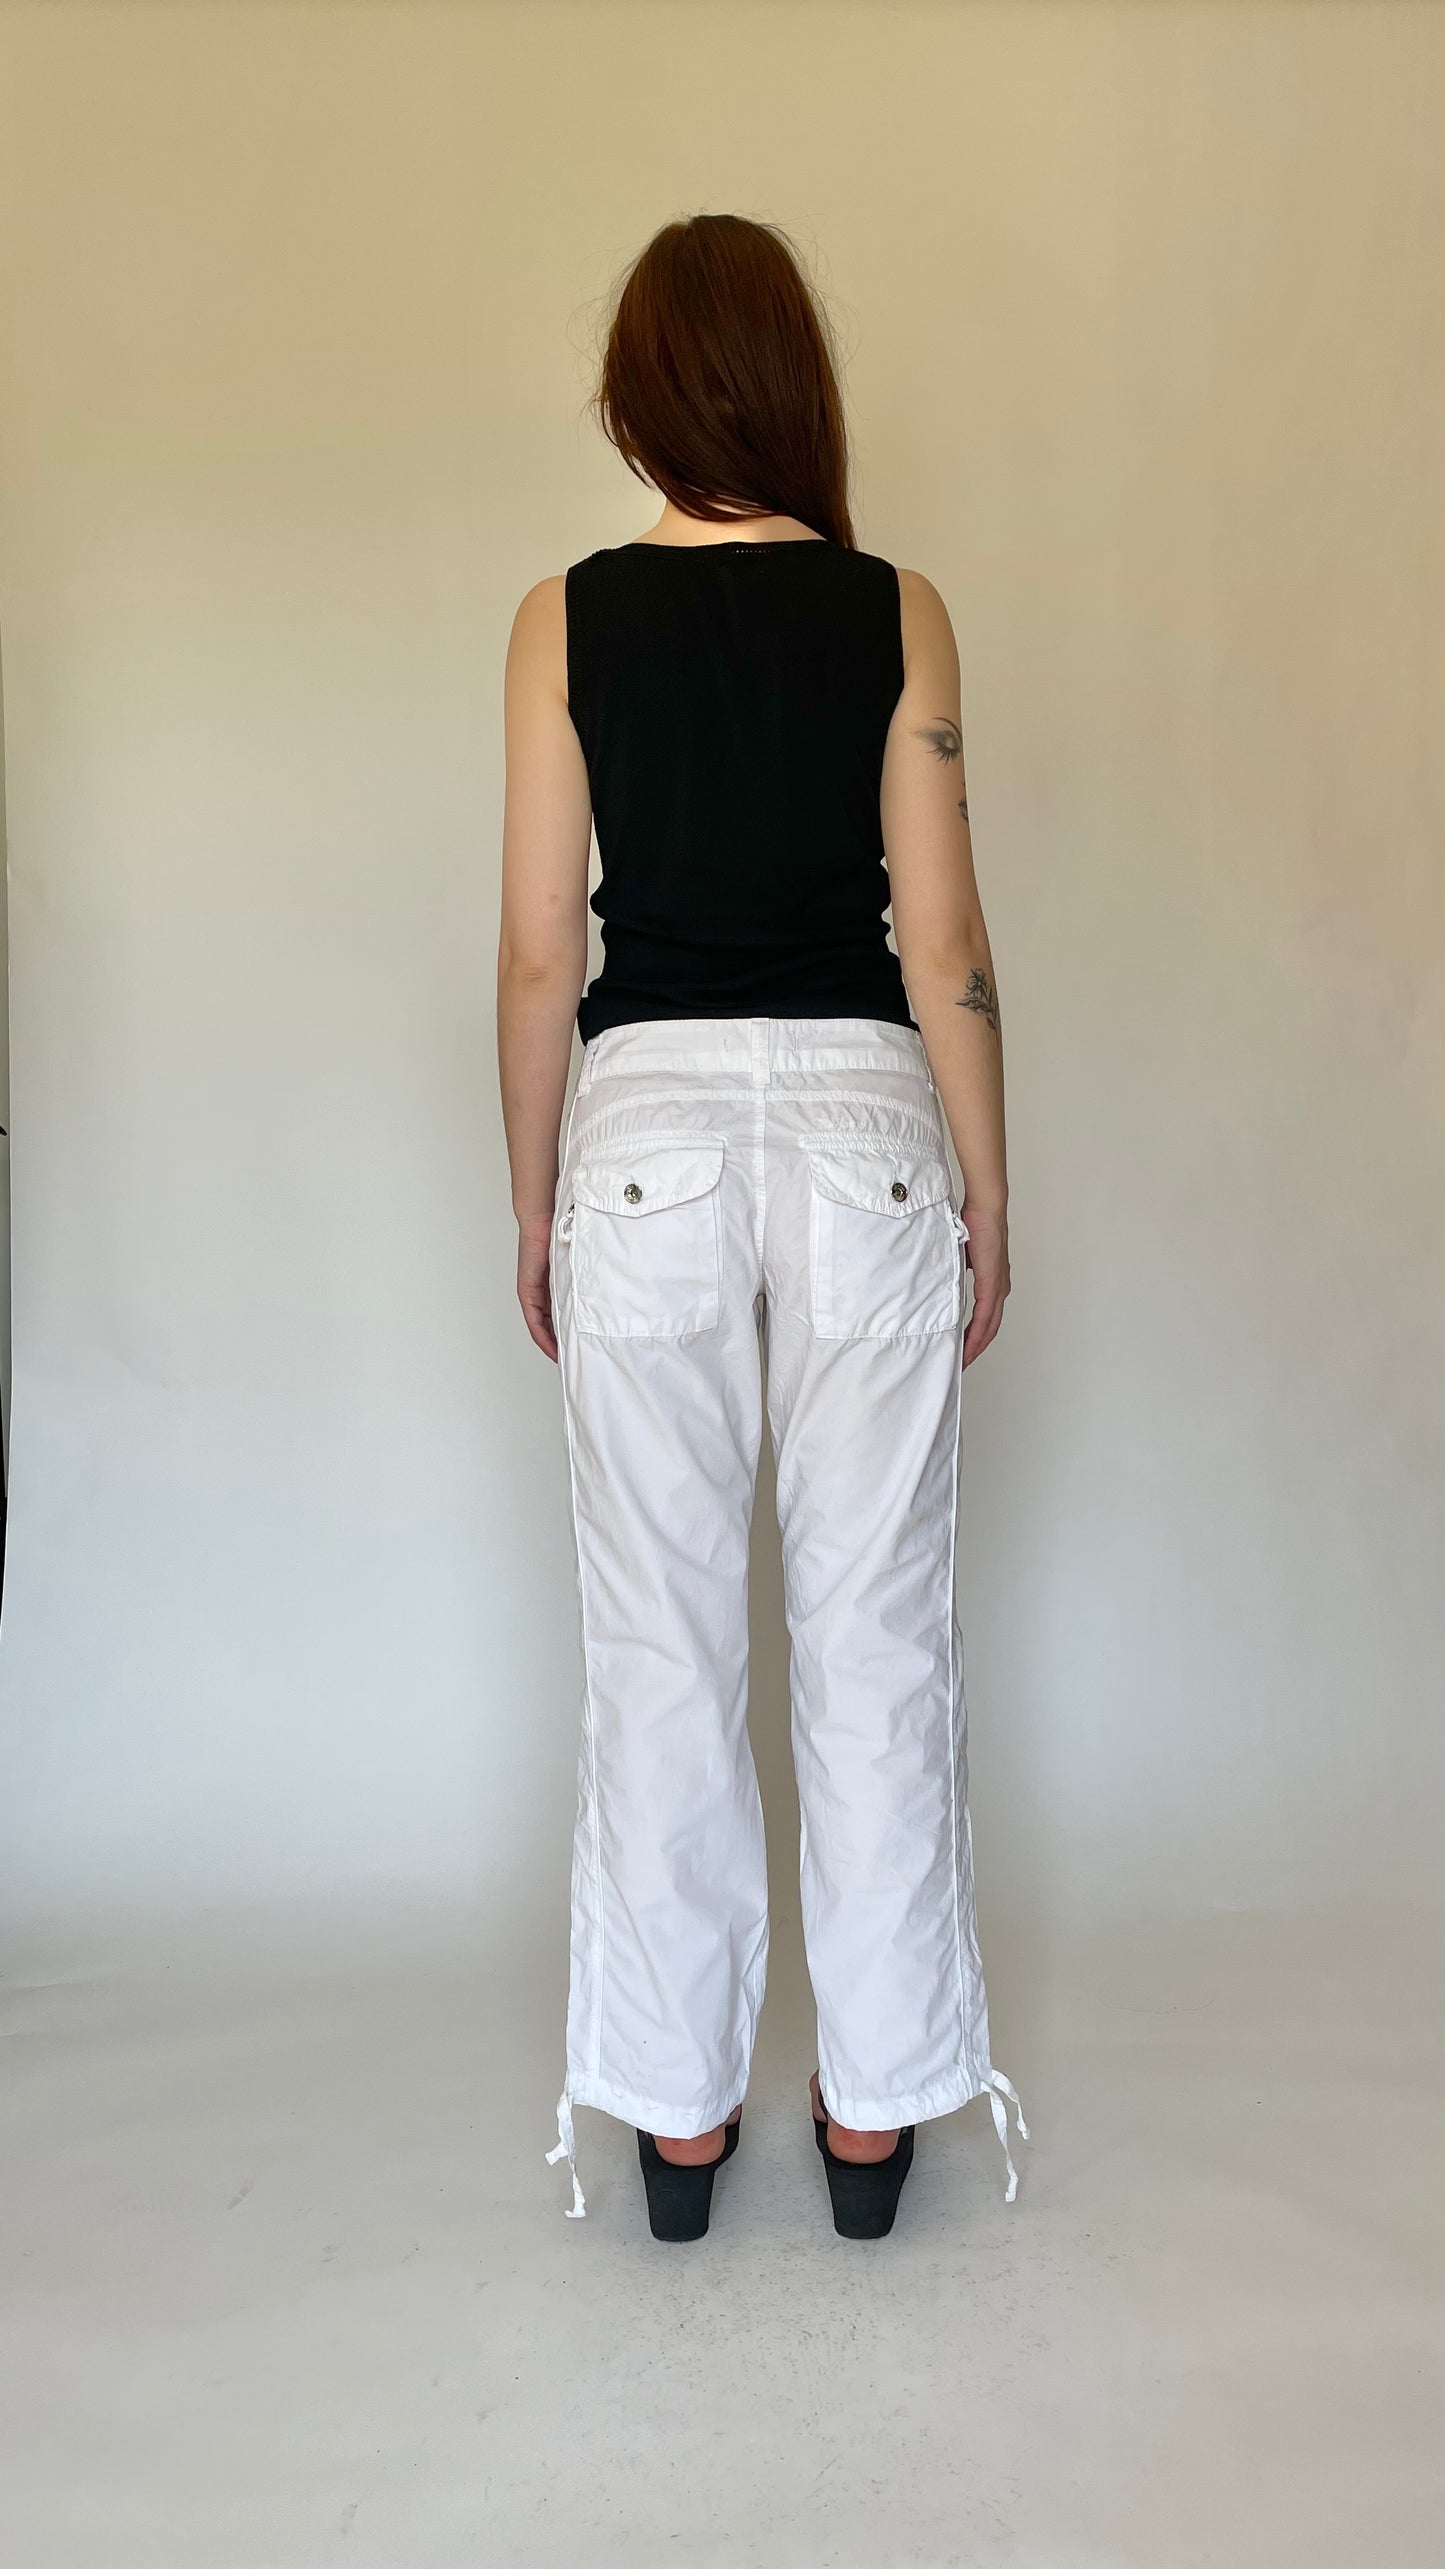 Liu jeans (size 34)